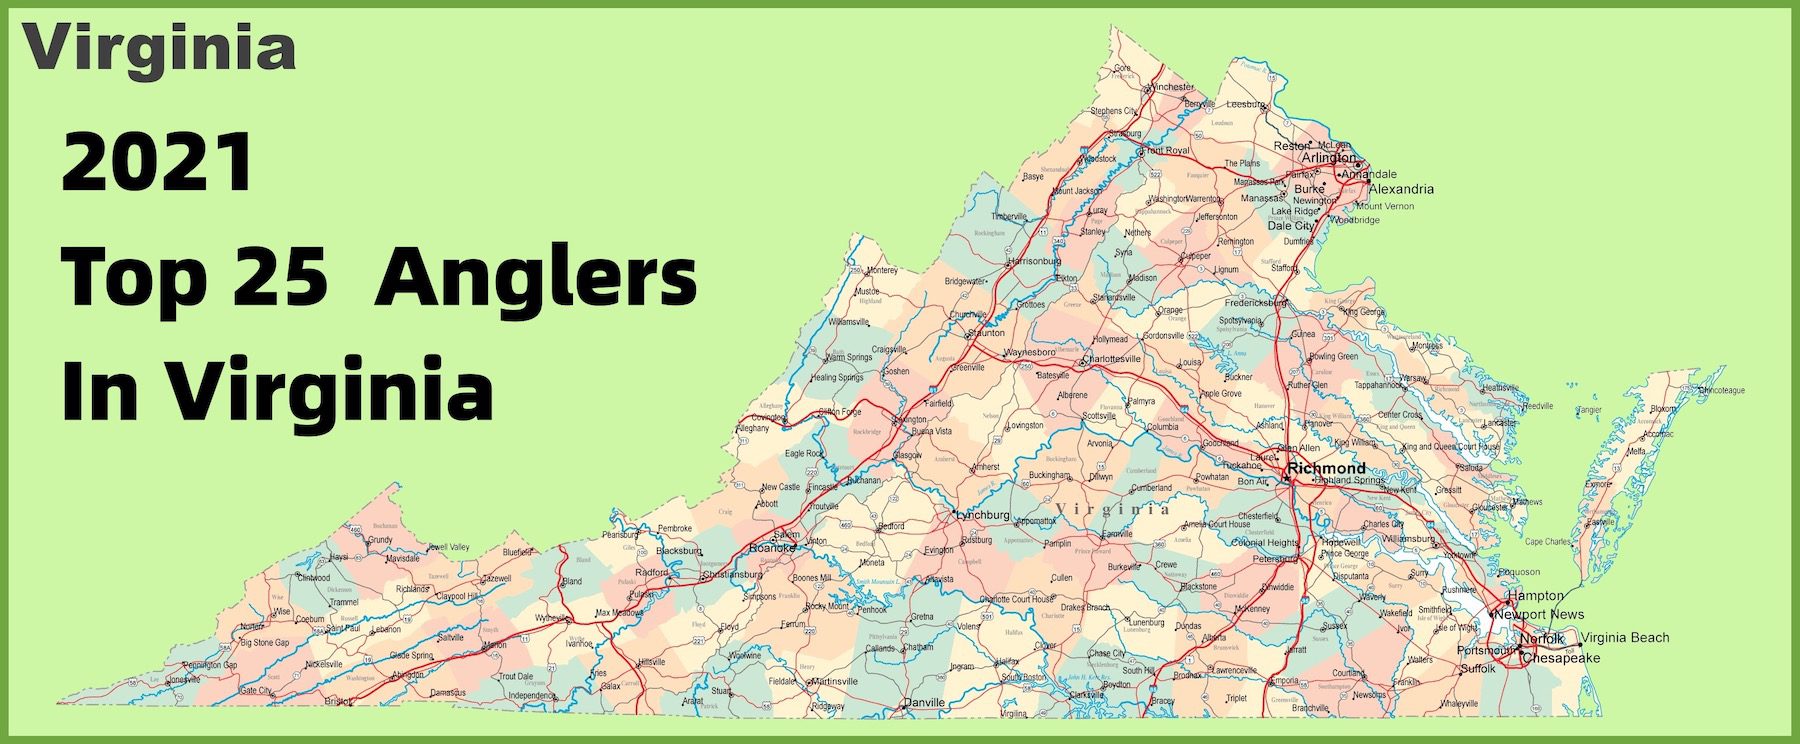 2021 Top 25 Anglers in Virginia